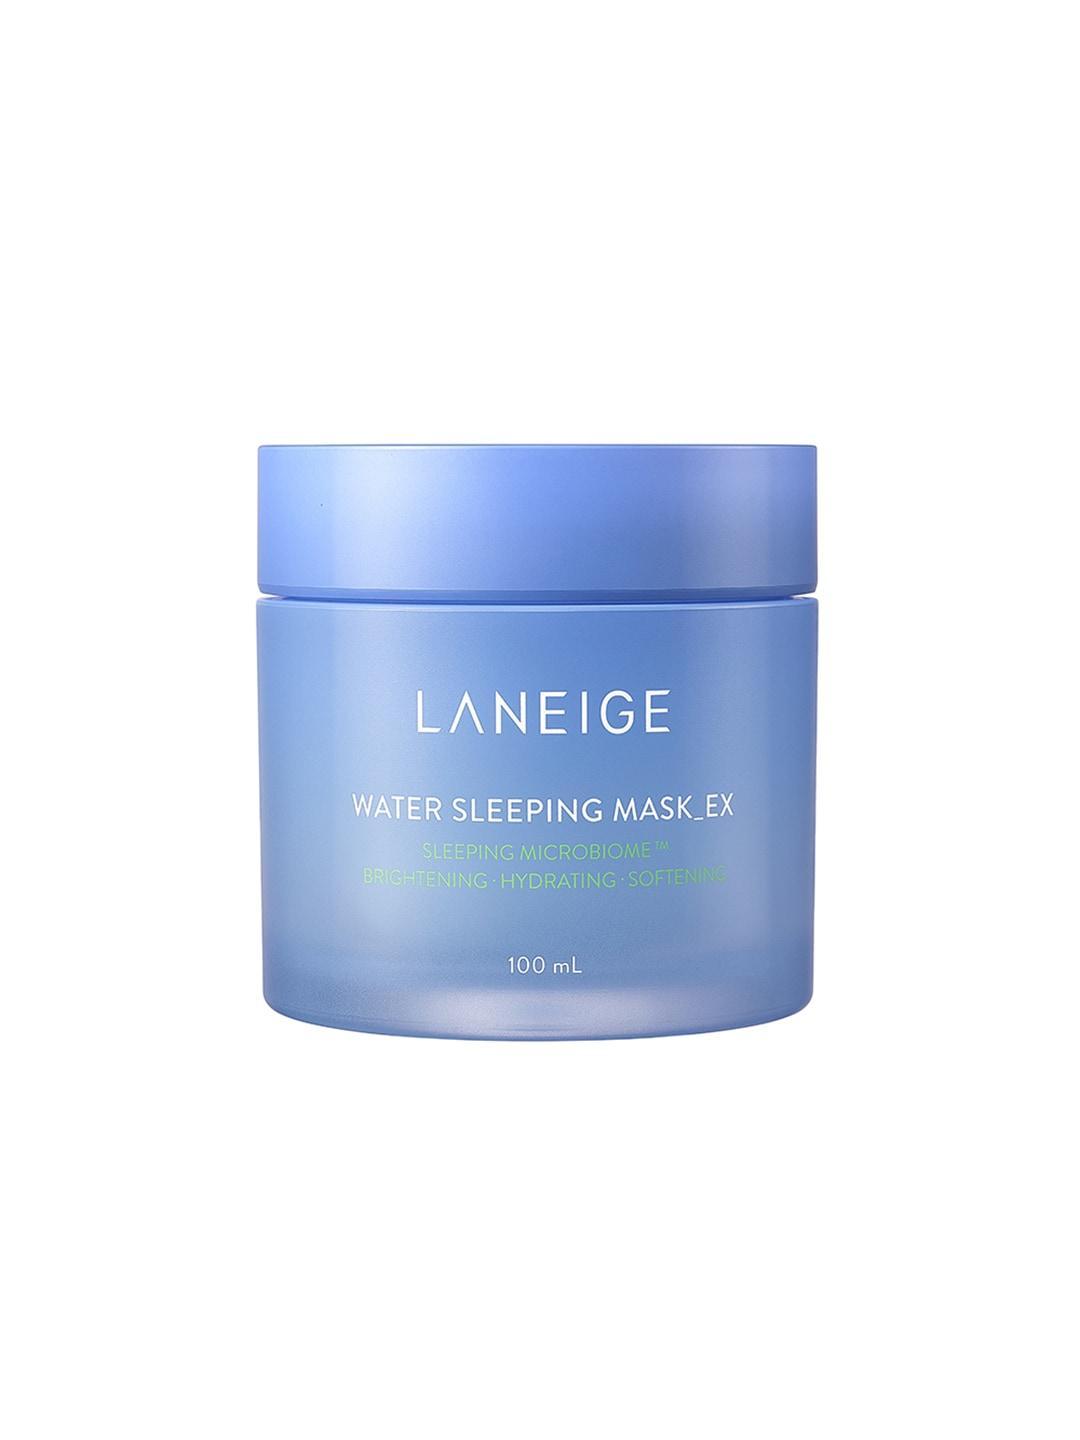 LANEIGE Water Sleeping Mask EX with Squalane - 100 ml